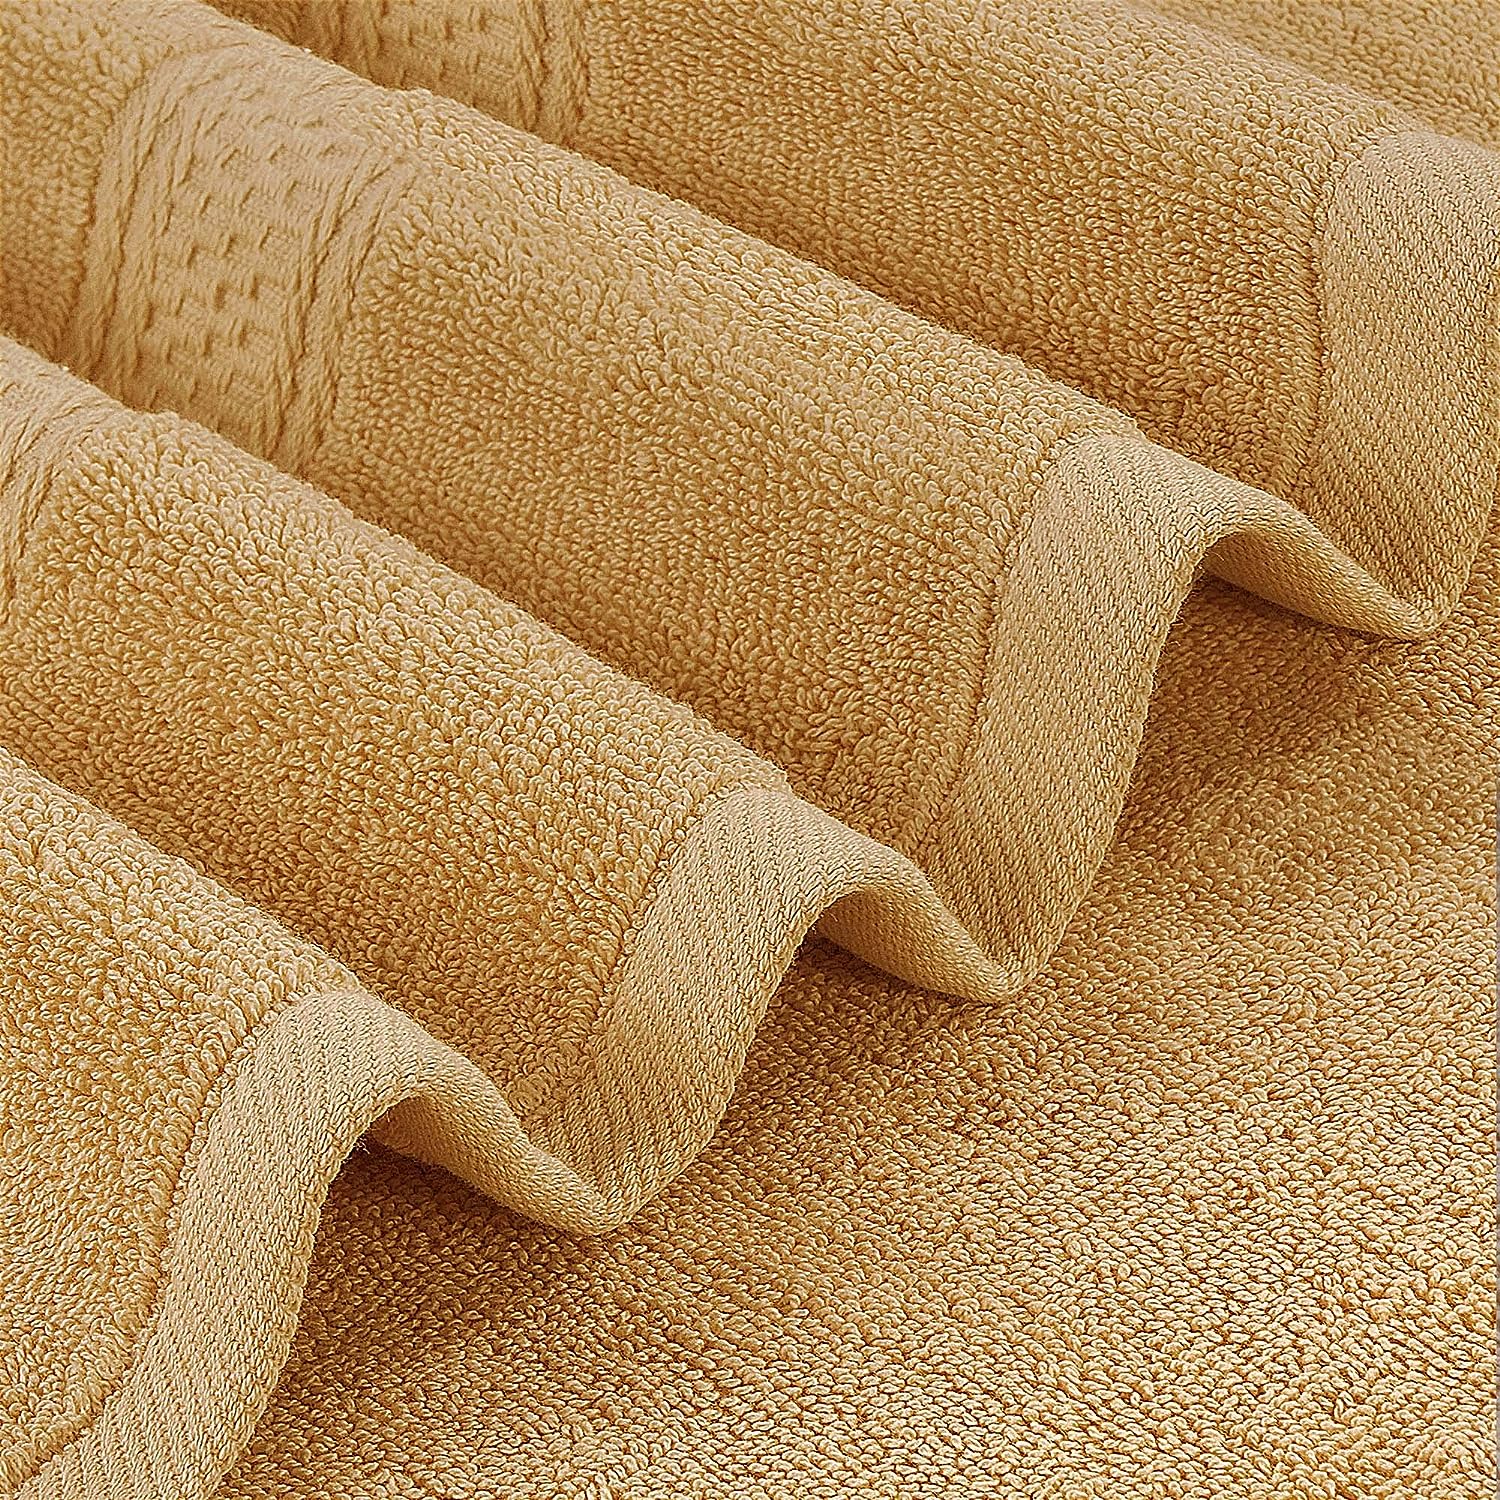 Utopia Towels - Luxurious Jumbo Bath Sheet 2 Piece - 600 GSM 100% Ring Spun  Cotton Highly Absorbent and Quick Dry Extra Large Ba